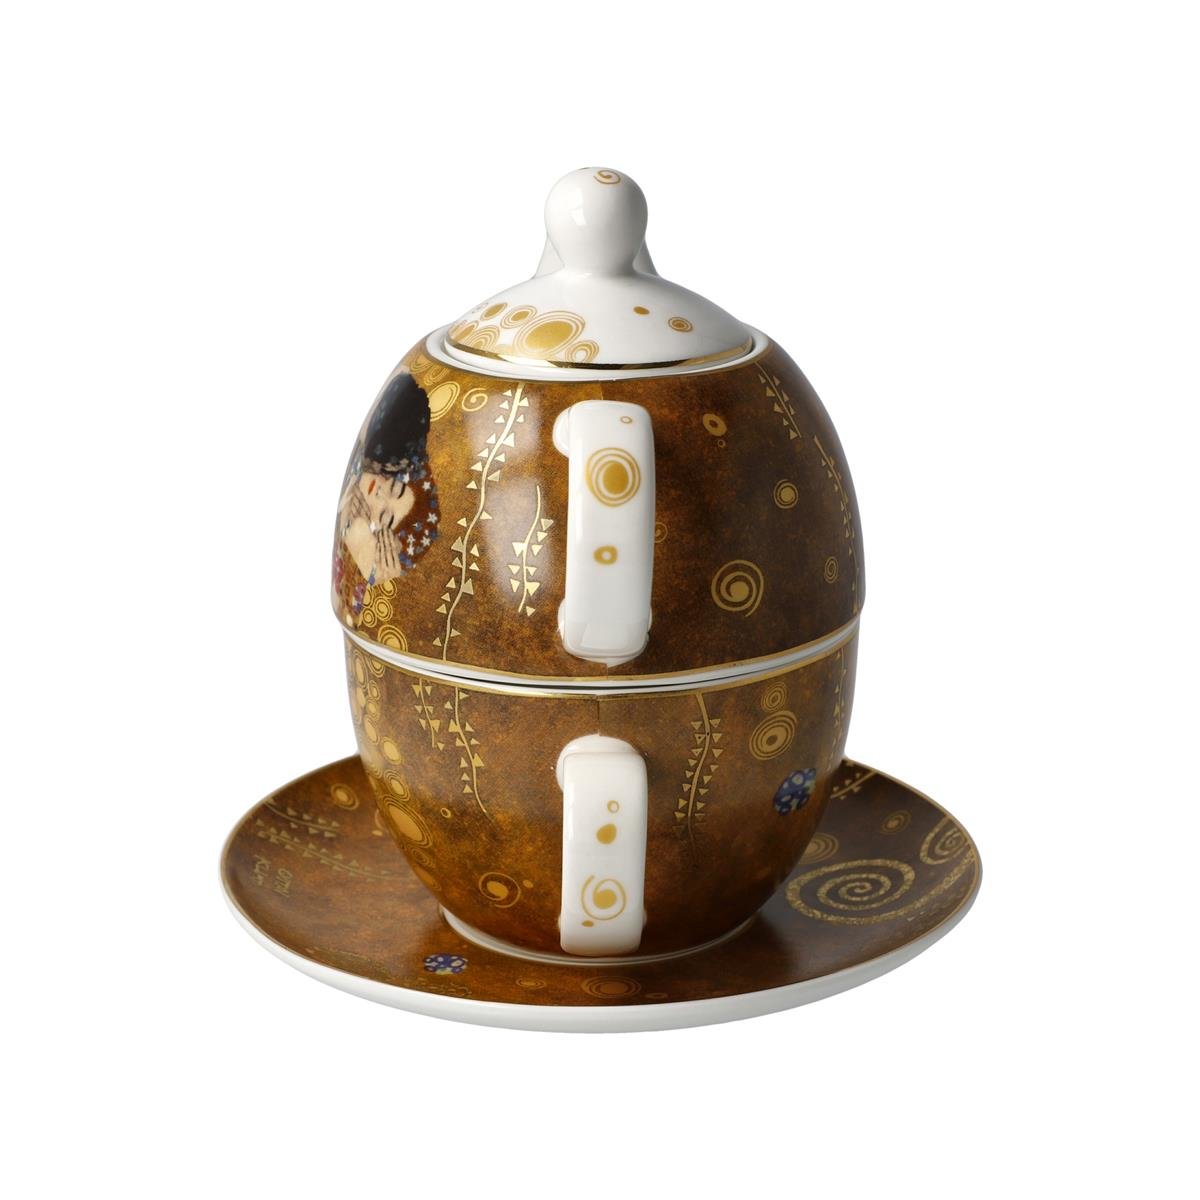 Kuss, Fine Der 47,95 € Goebel Klimt Gustav Tea for - China, Bone One